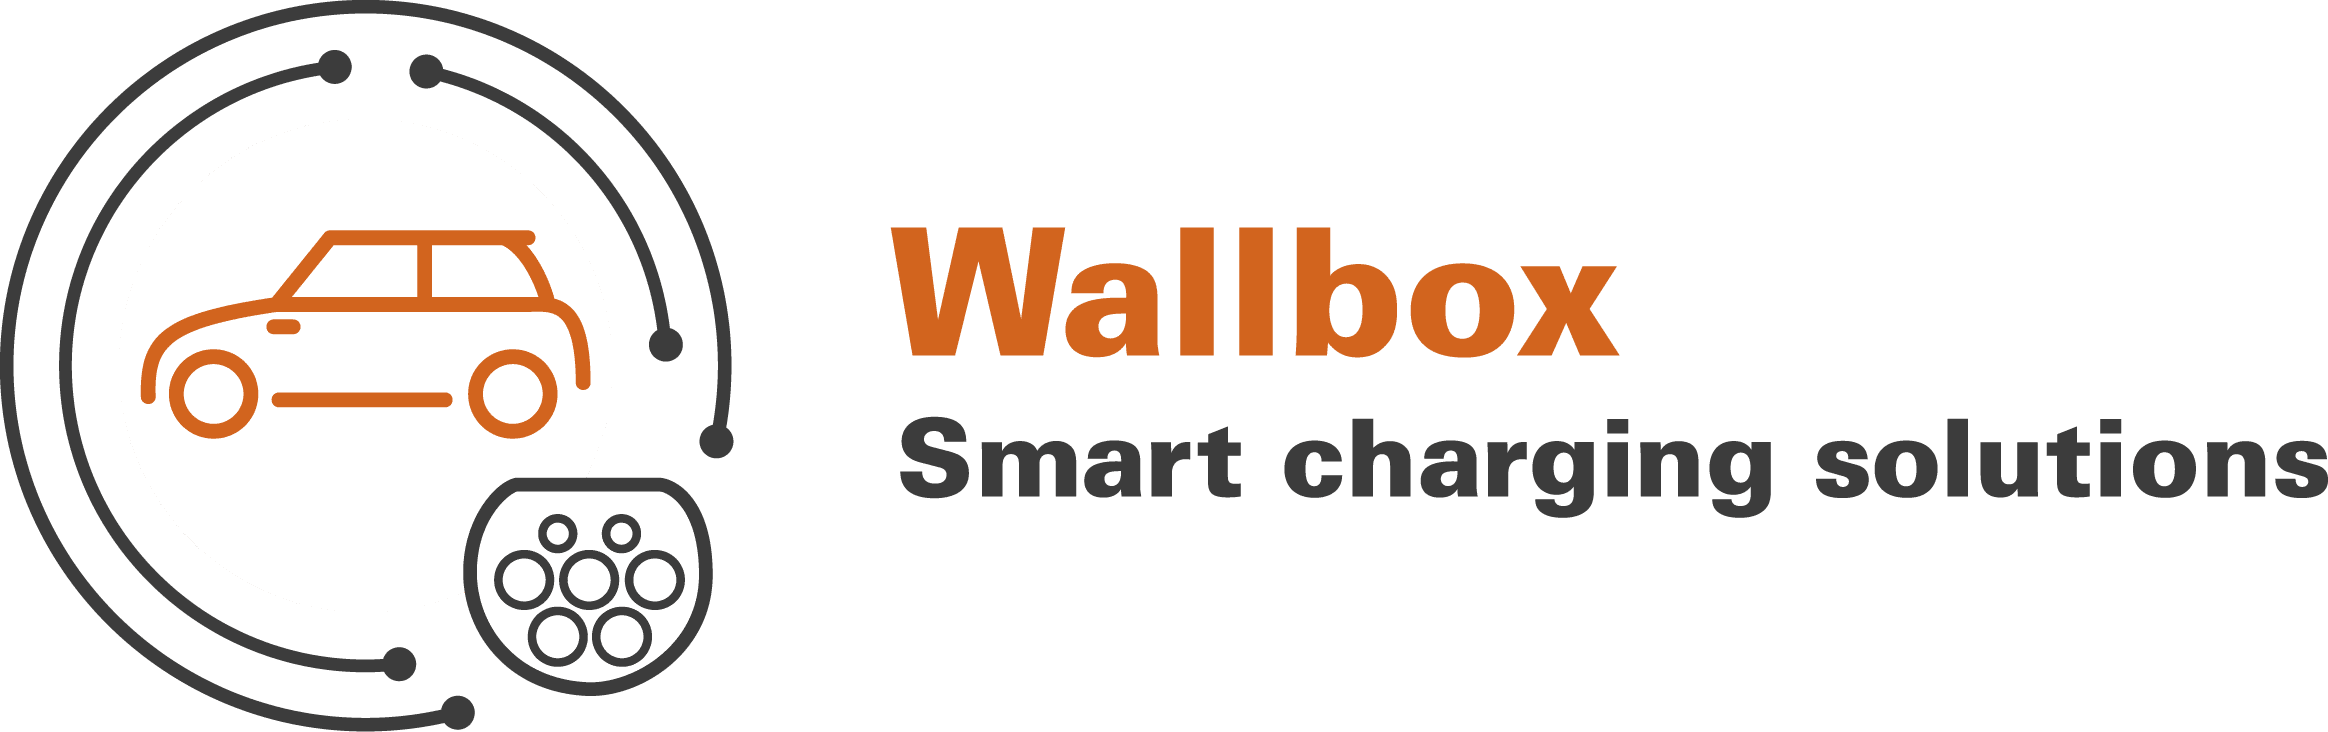 Wallbox - smart charging solutions